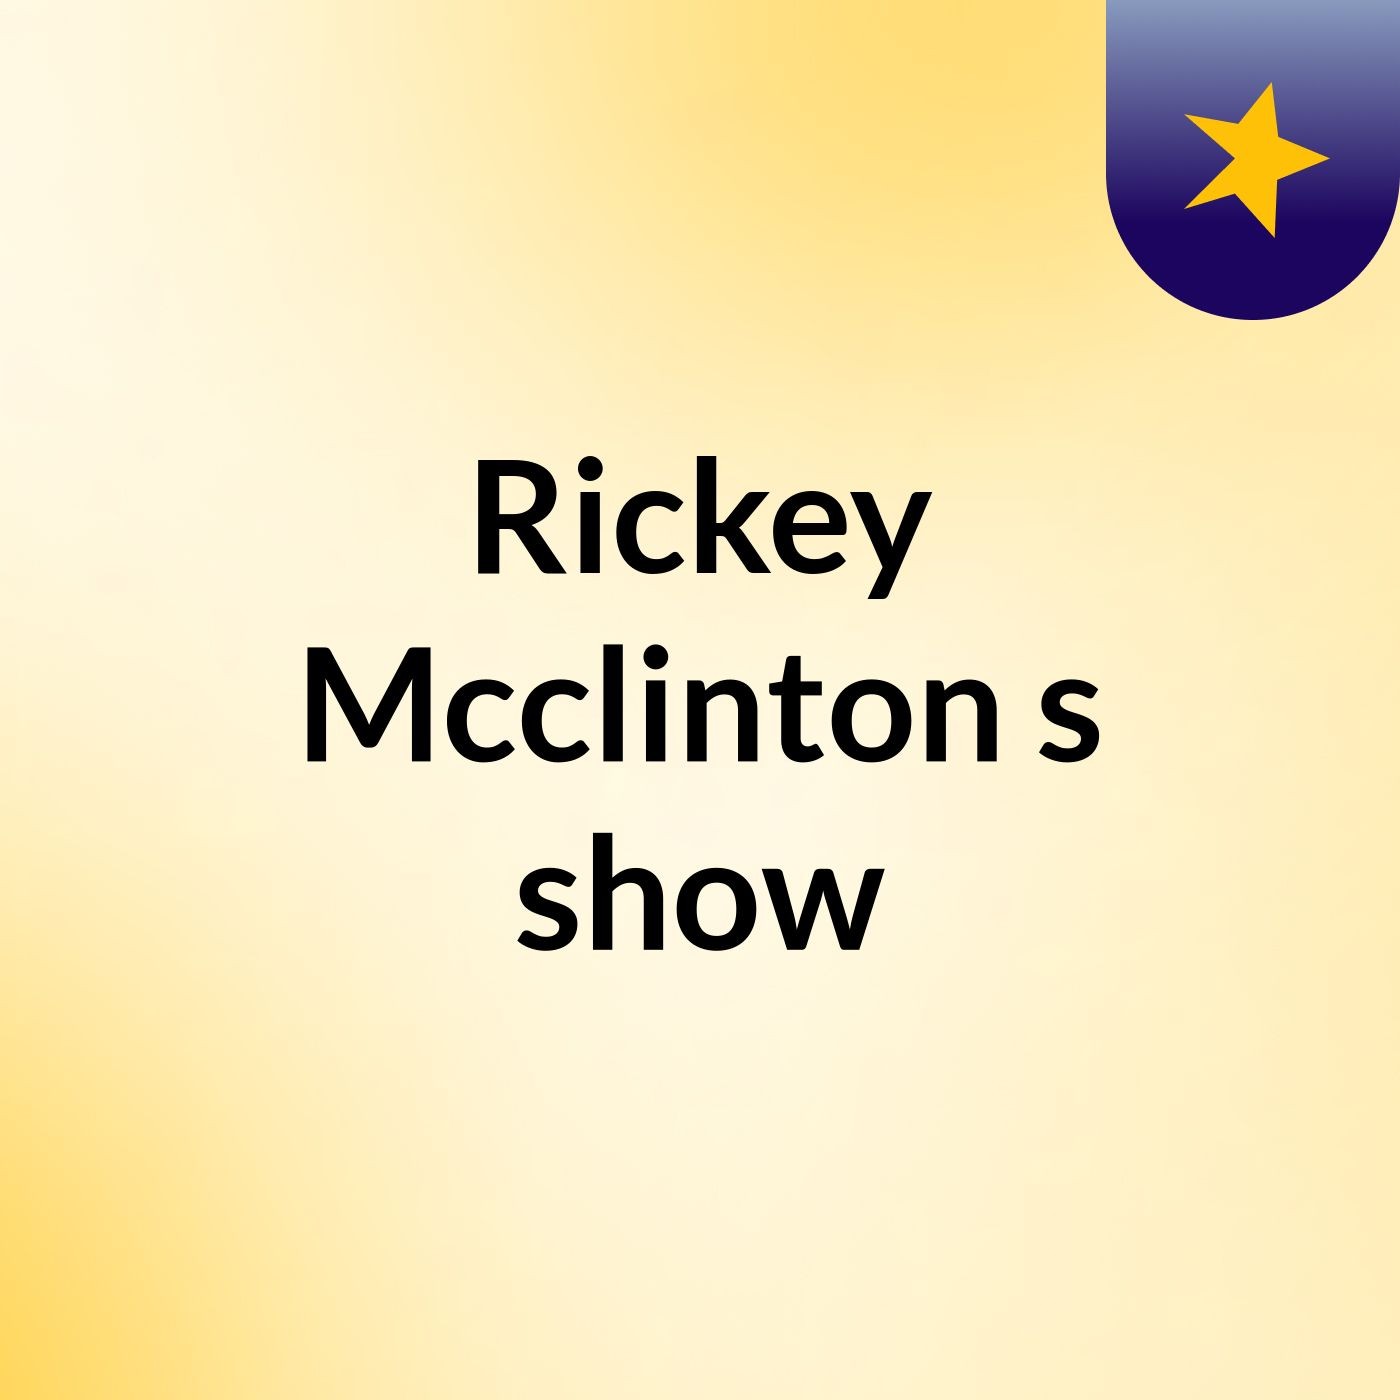 Episode 3 - Rickey Mcclinton's show